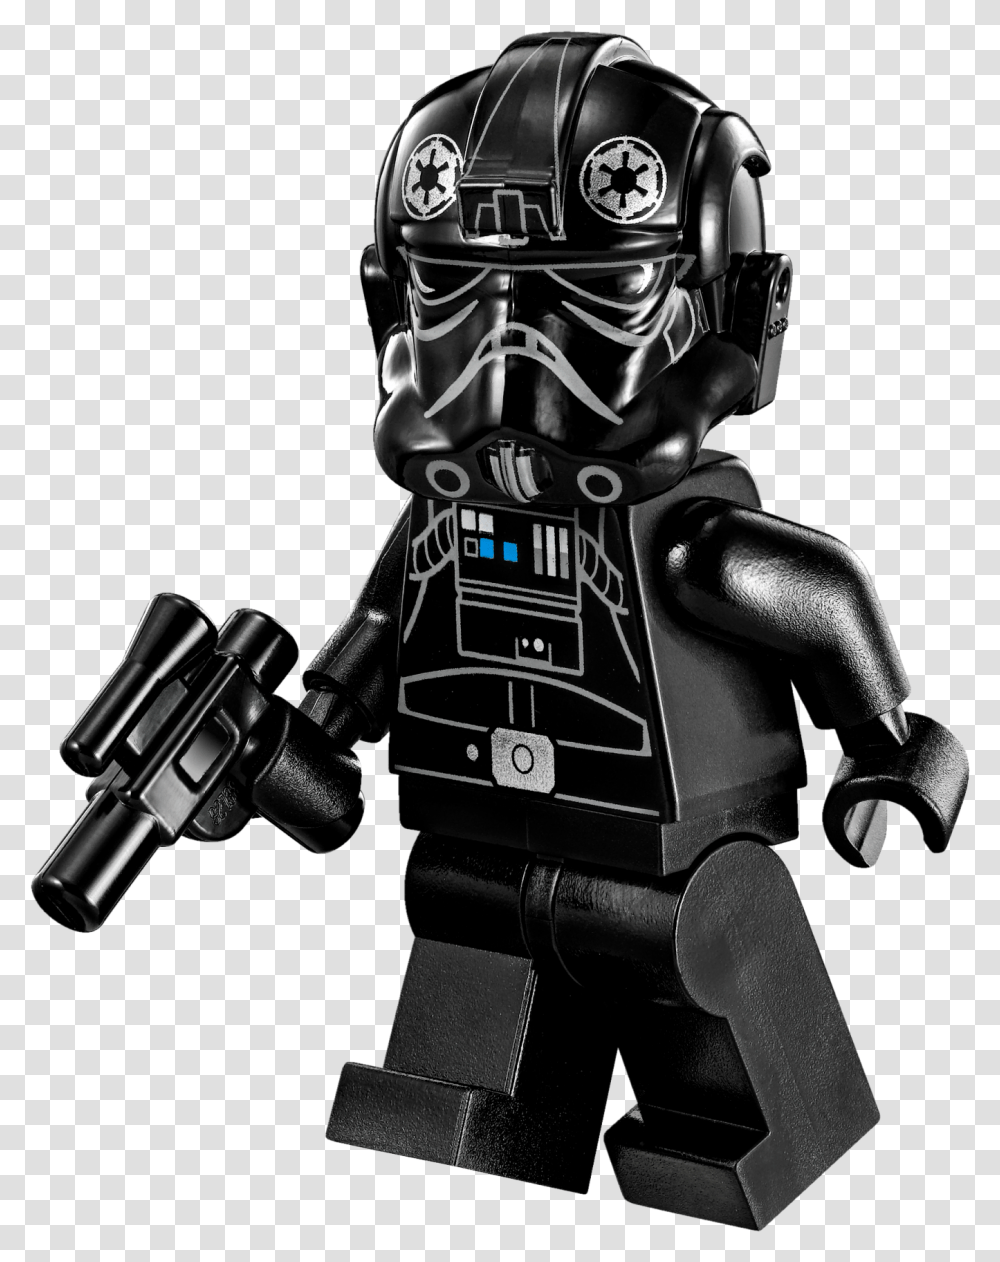 Lego Star Wars 75082 Tie Advanced Prototype Lego Star Wars Tie Pilot, Robot, Helmet, Clothing, Apparel Transparent Png